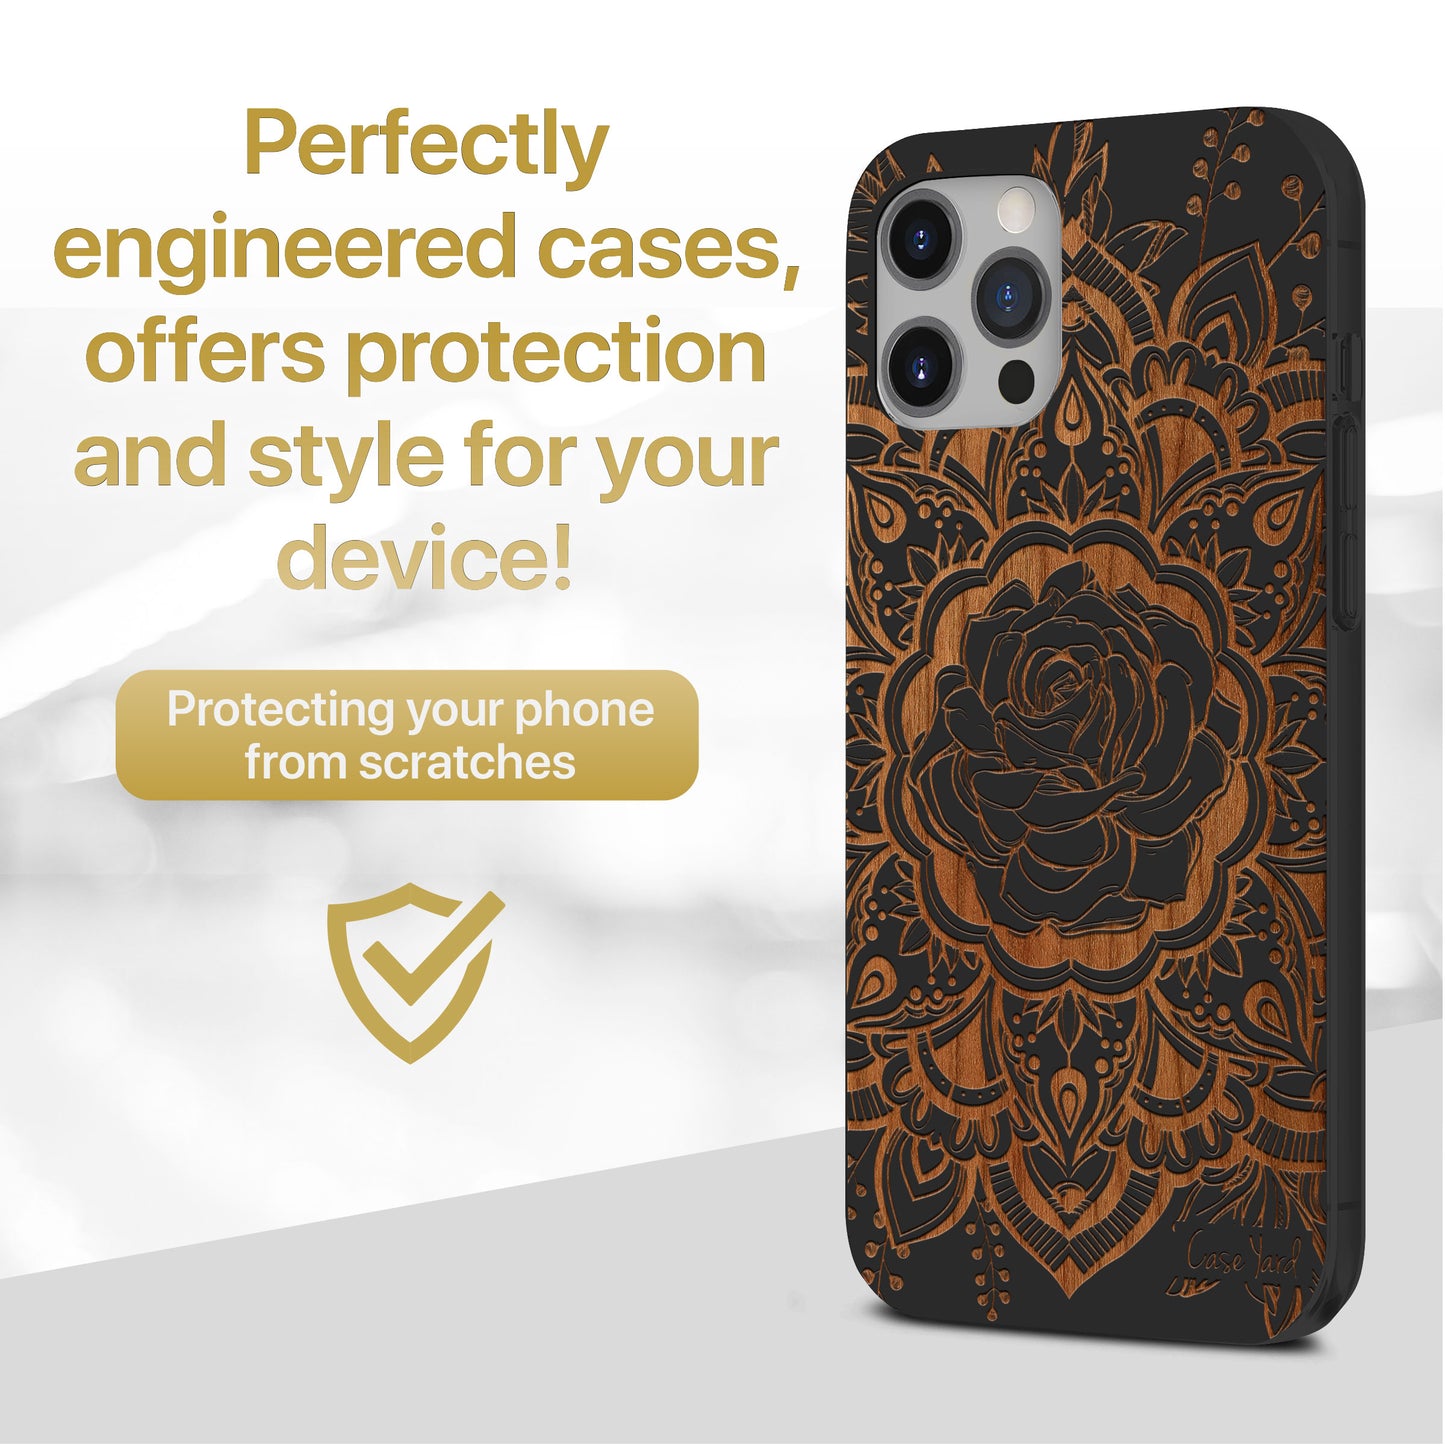 Wooden Cell Phone Case Cover, Laser Engraved case for iPhone & Samsung phone Rose Mandala Design